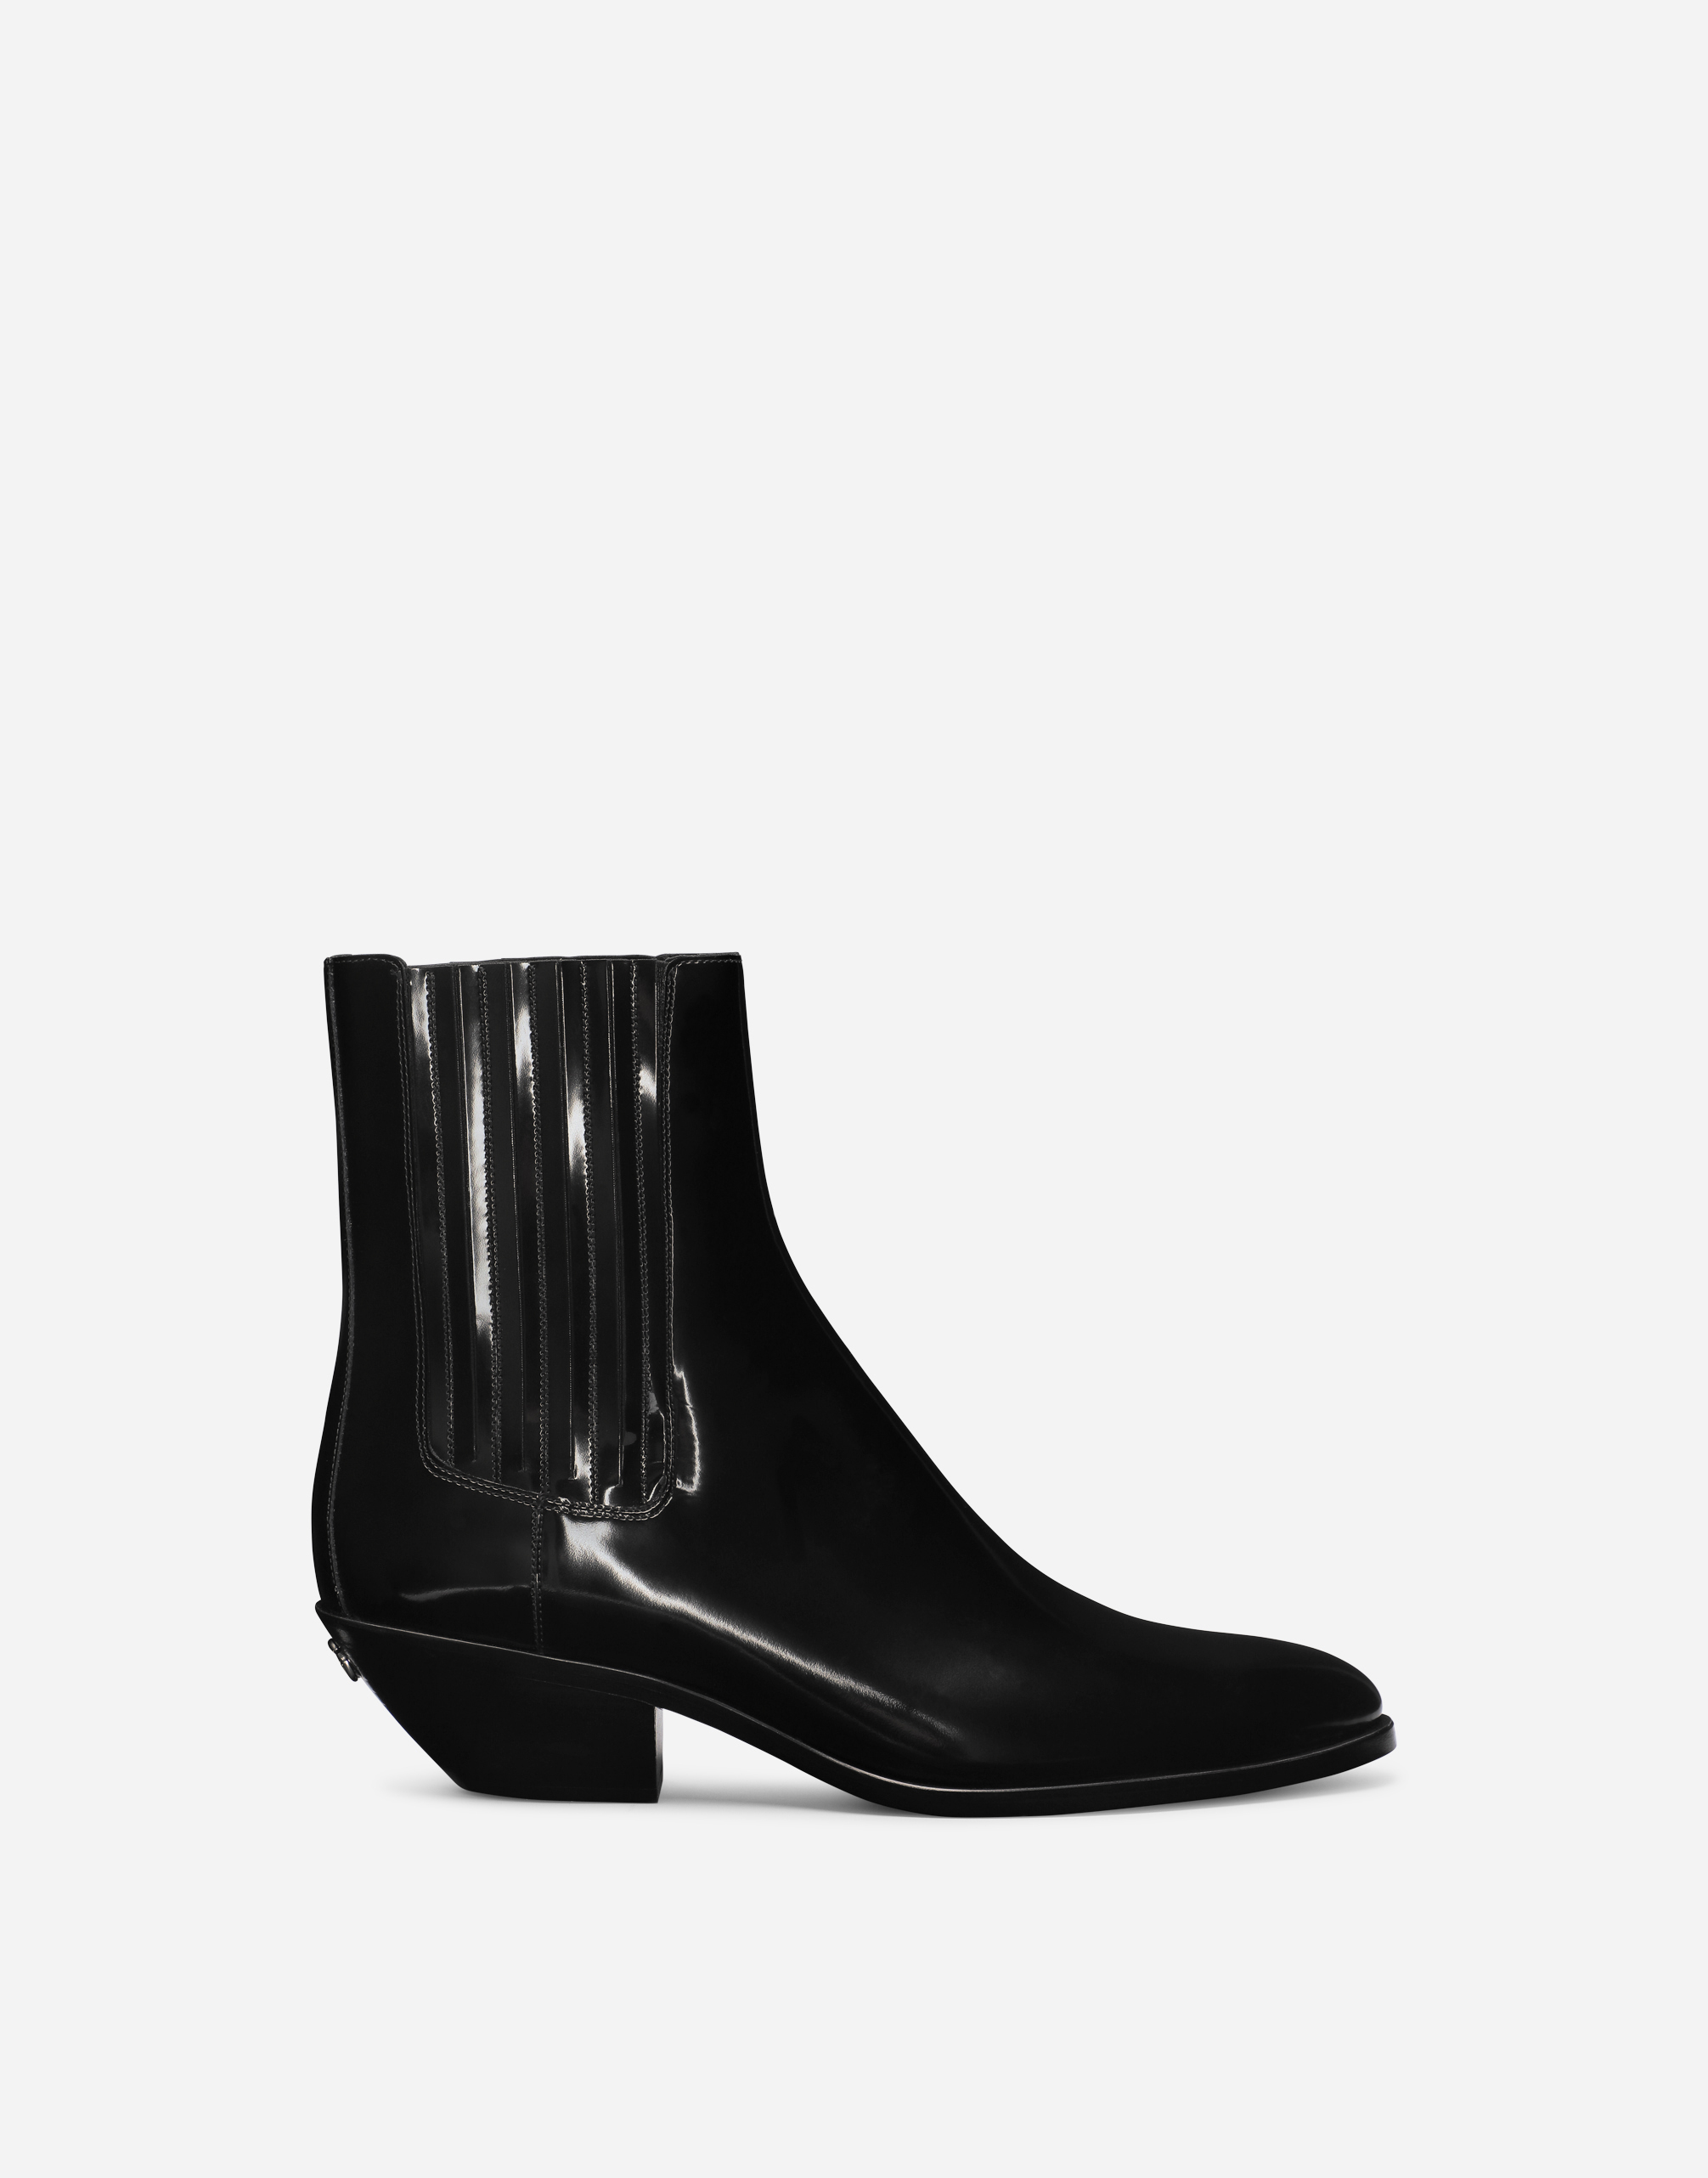 Polished calfskin Texan boots in Black